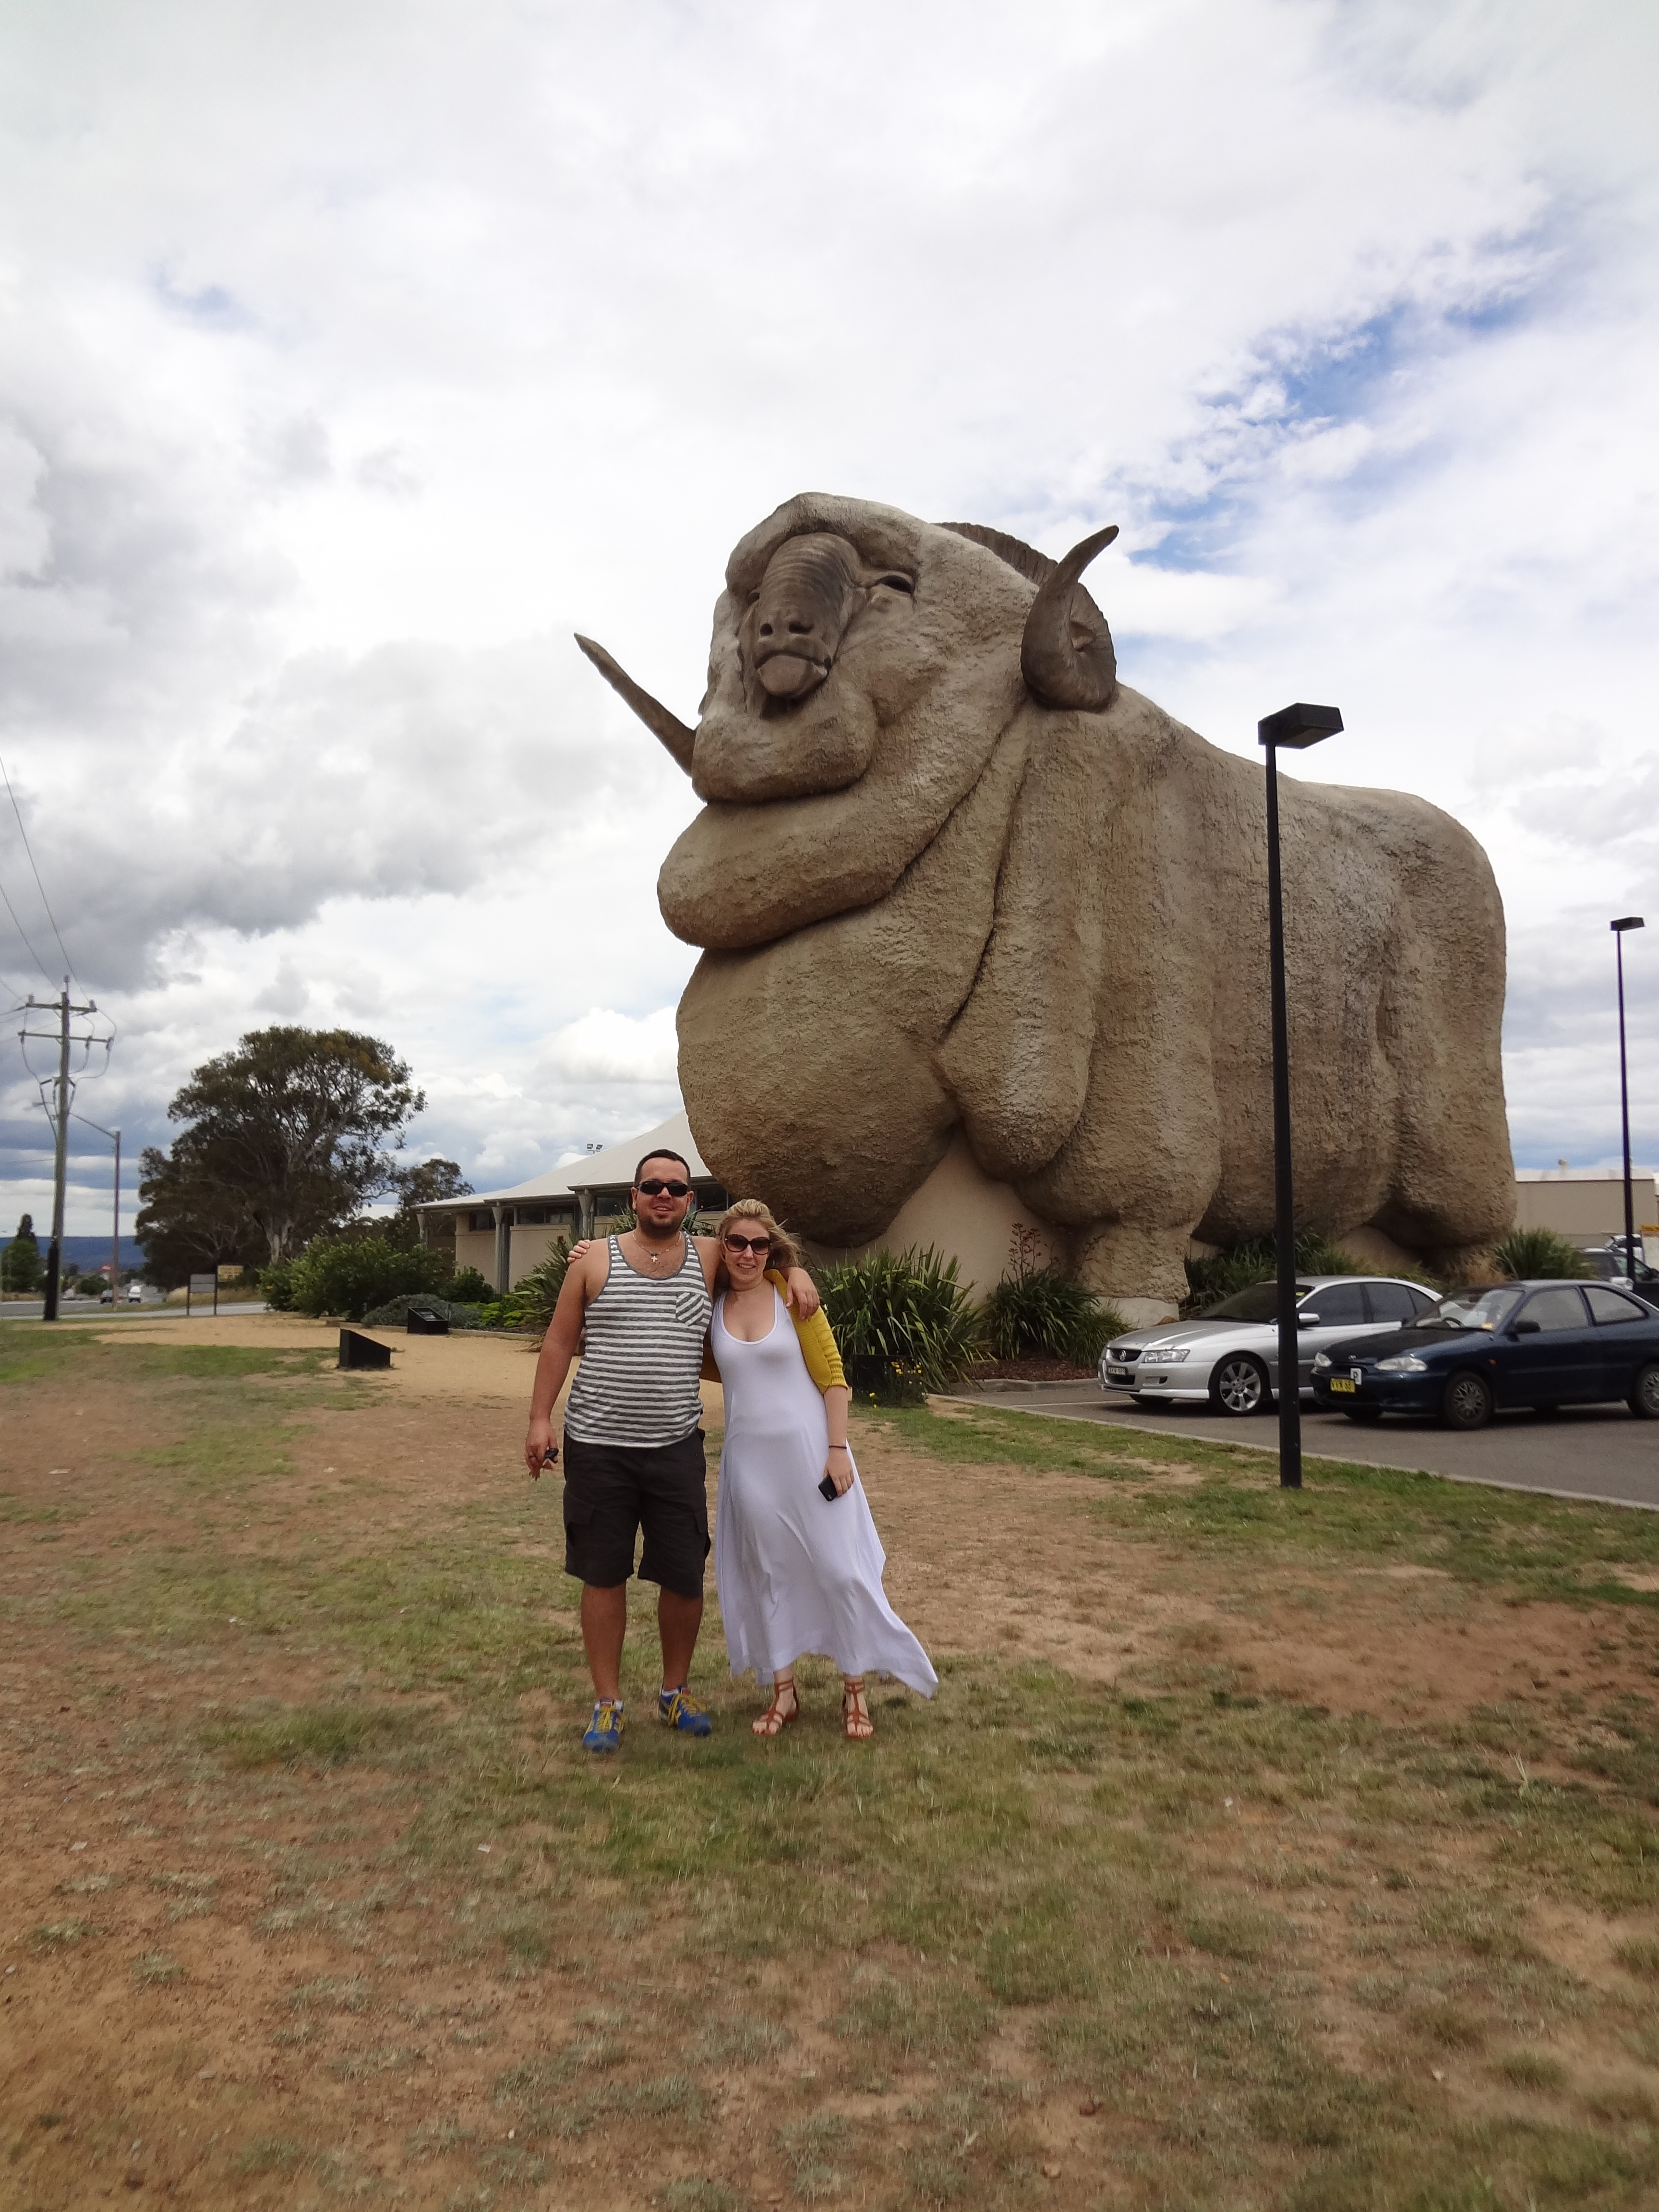 Carlita - Road Trip Tales - We met the Big Merino